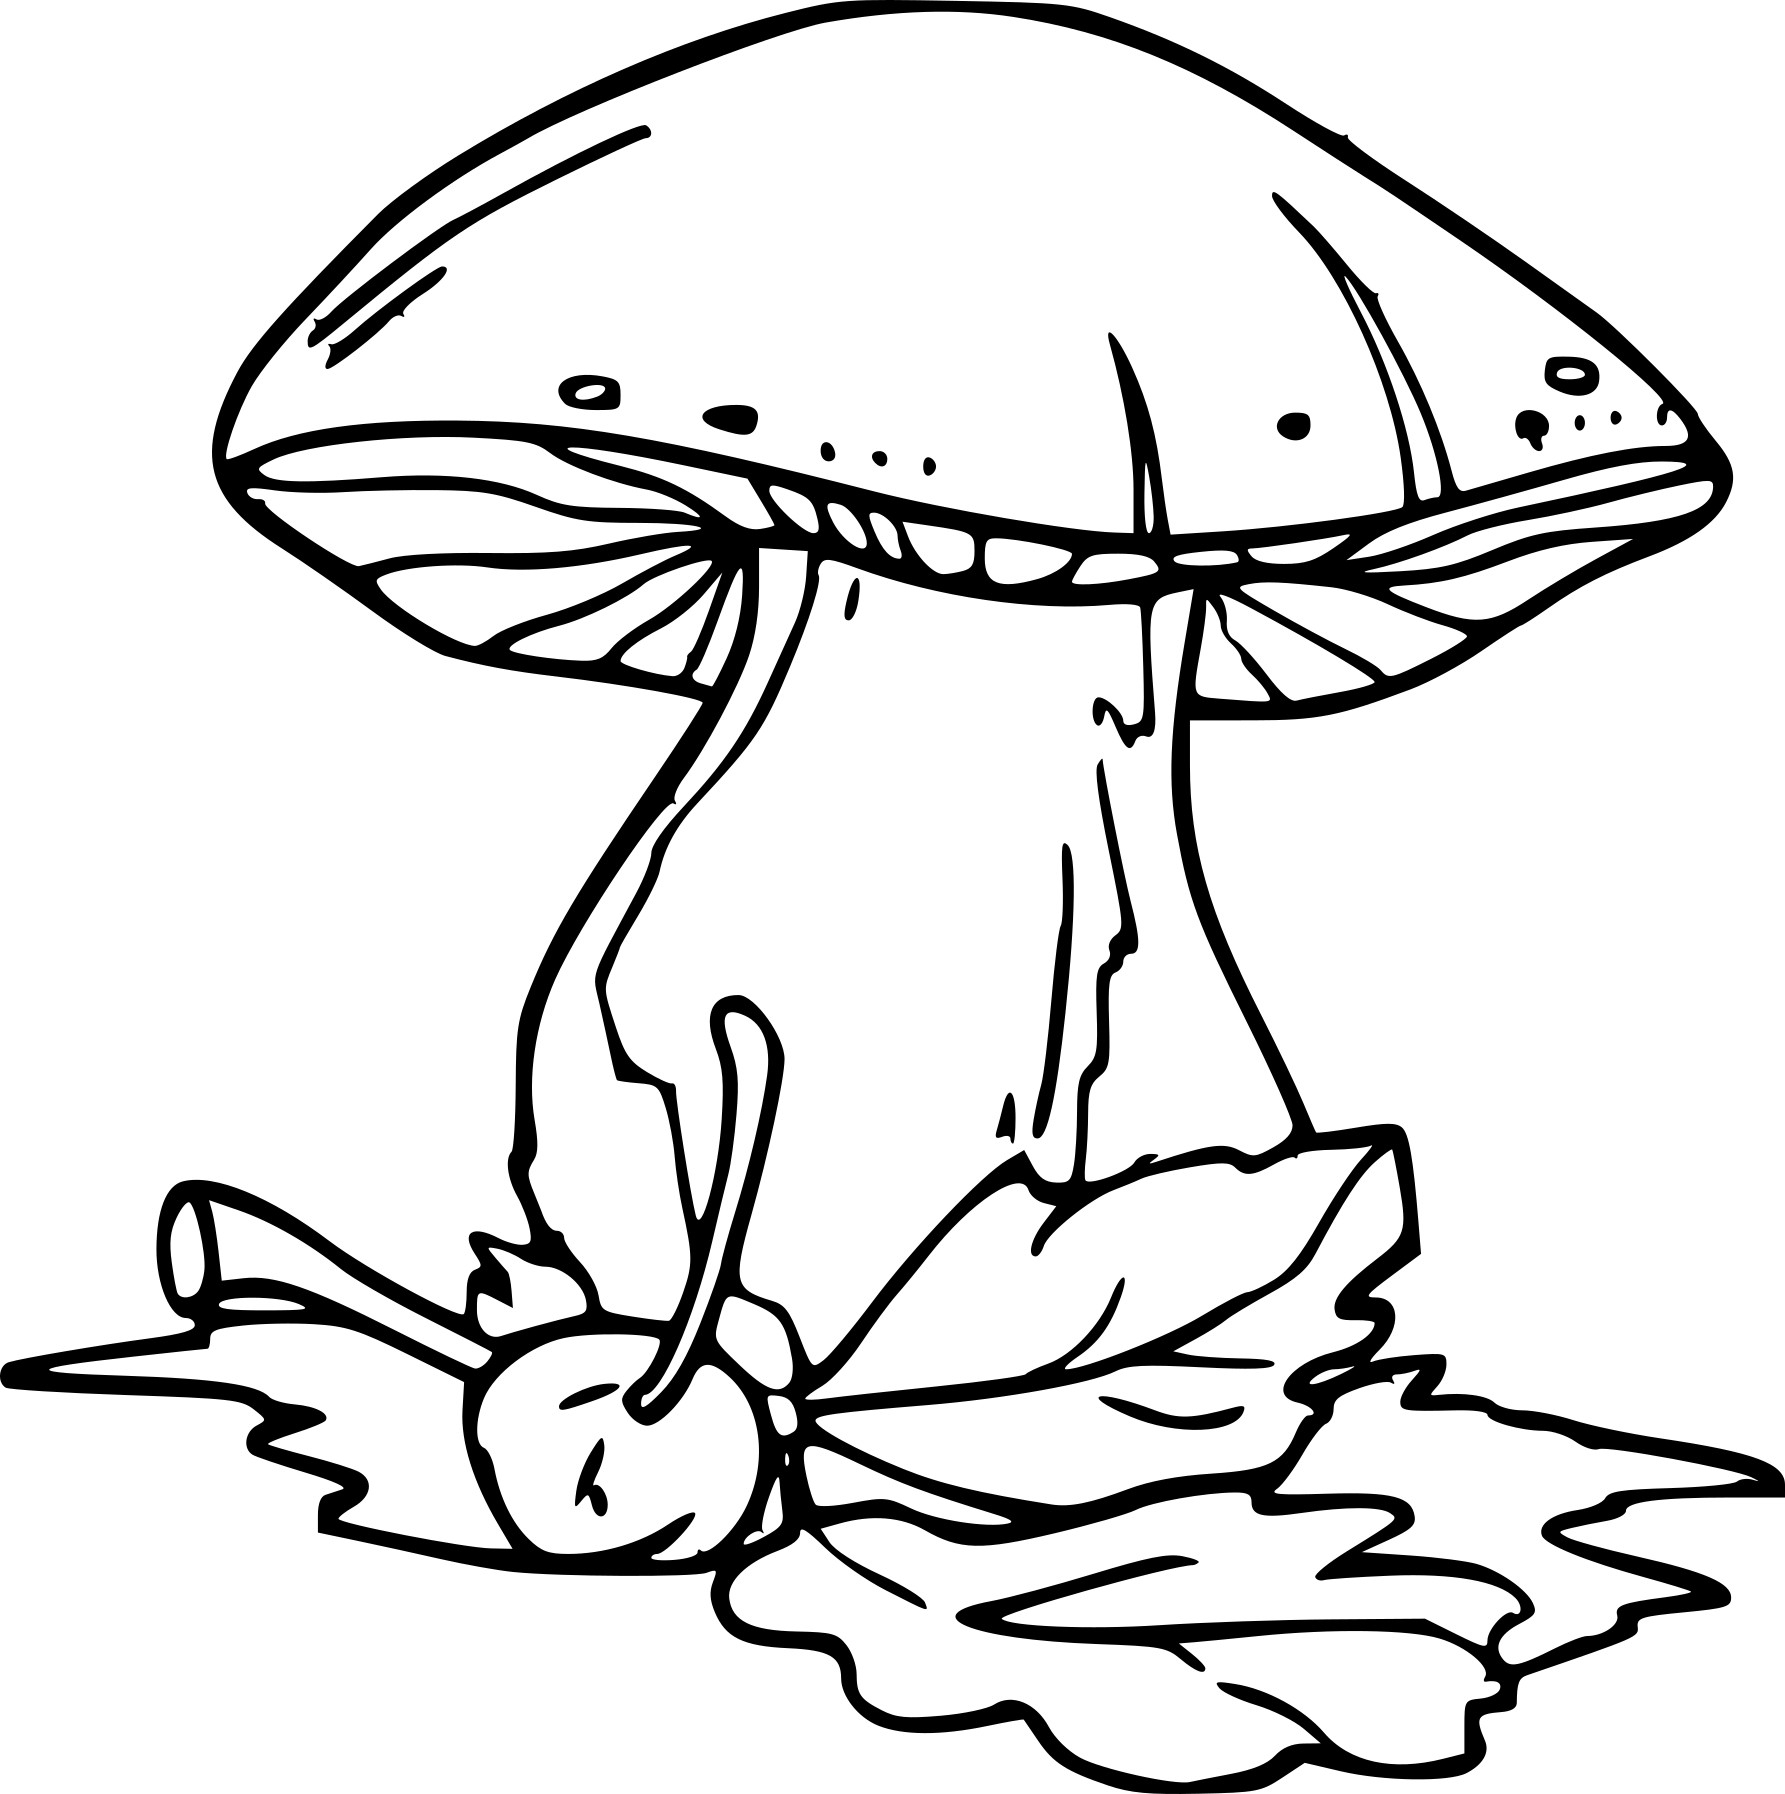 Coloring book joyful mushrooms for children 6-7 years old